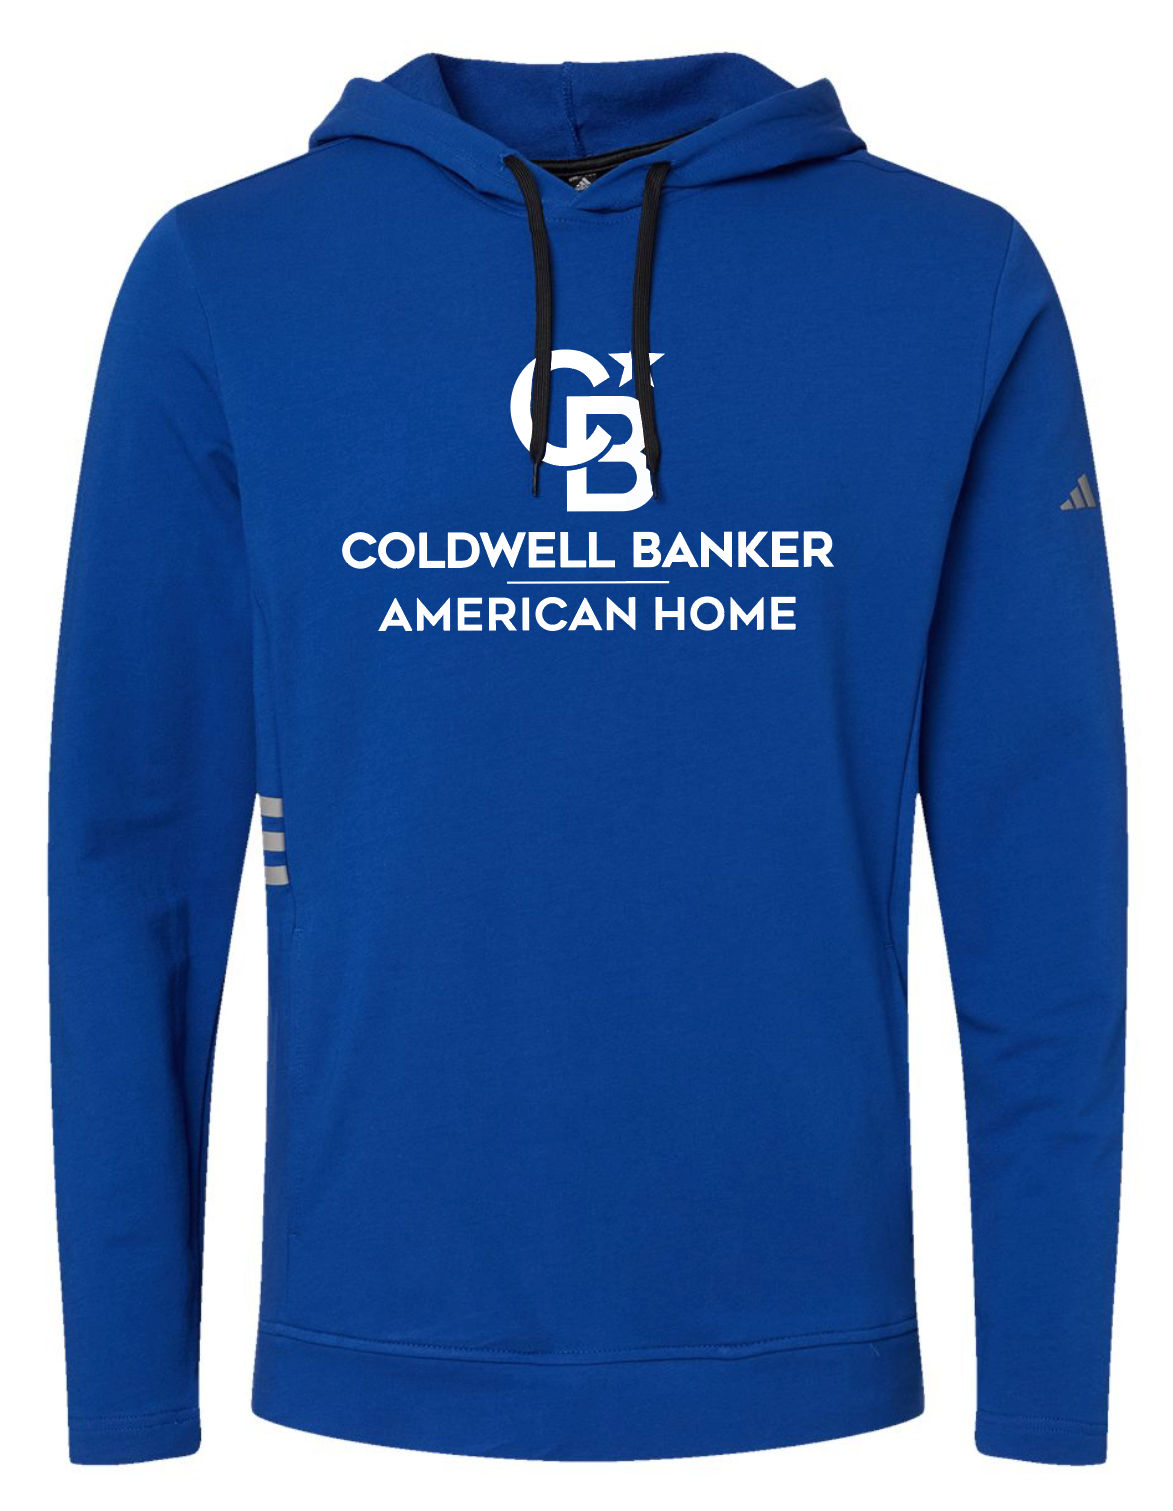 Coldwell Banker Adidas Lightweight Hooded Sweatshirt